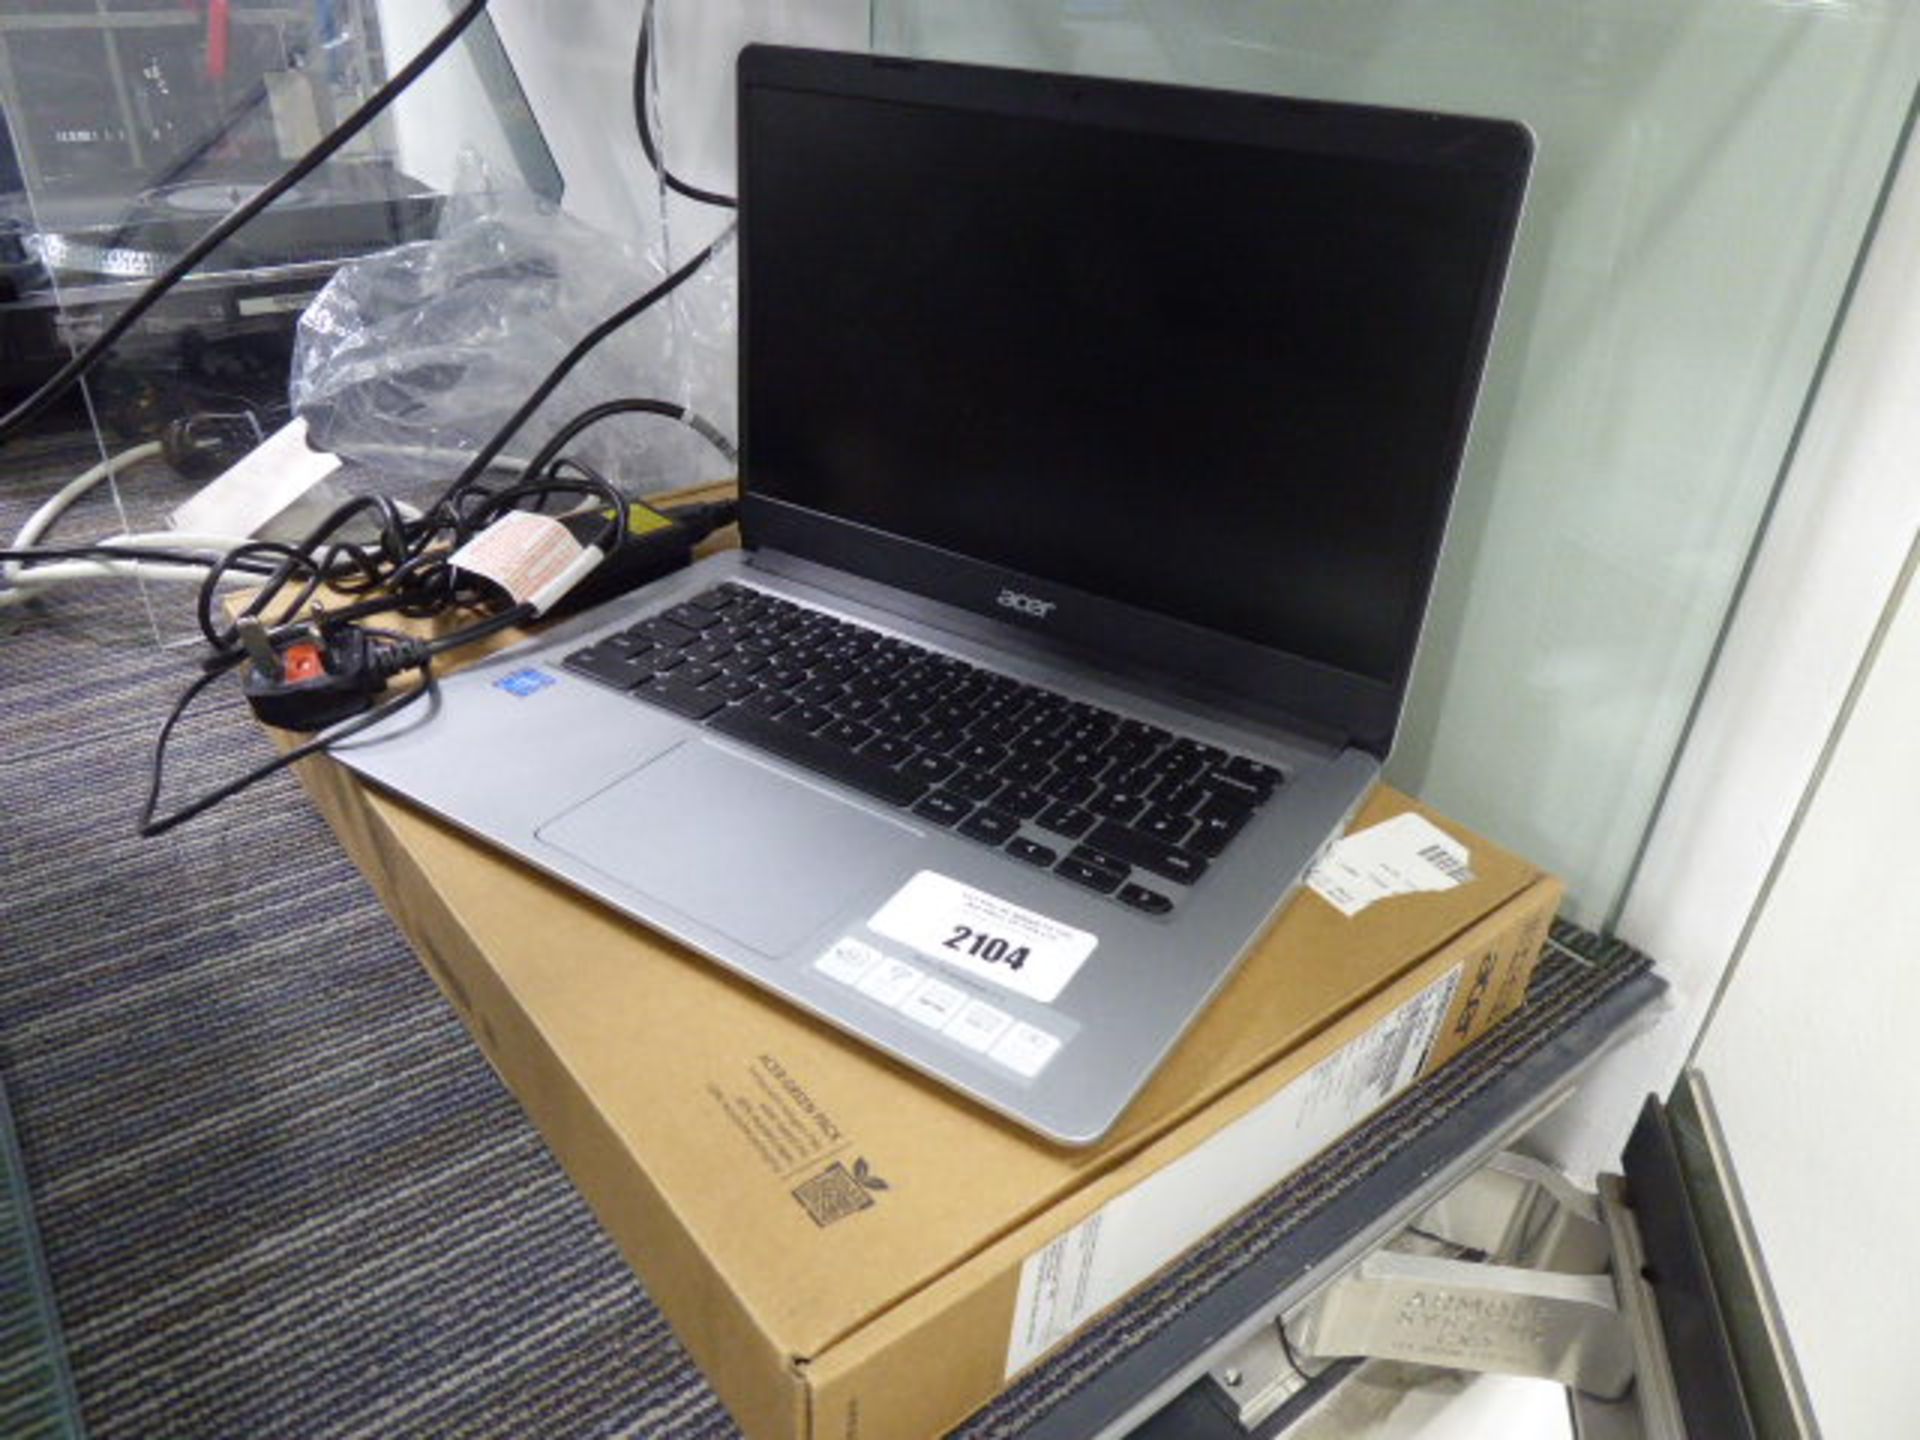 Acer Chromebook 314 laptop Intel Celeron processor, 4Gb RAM, 64Gb storage with psu and box